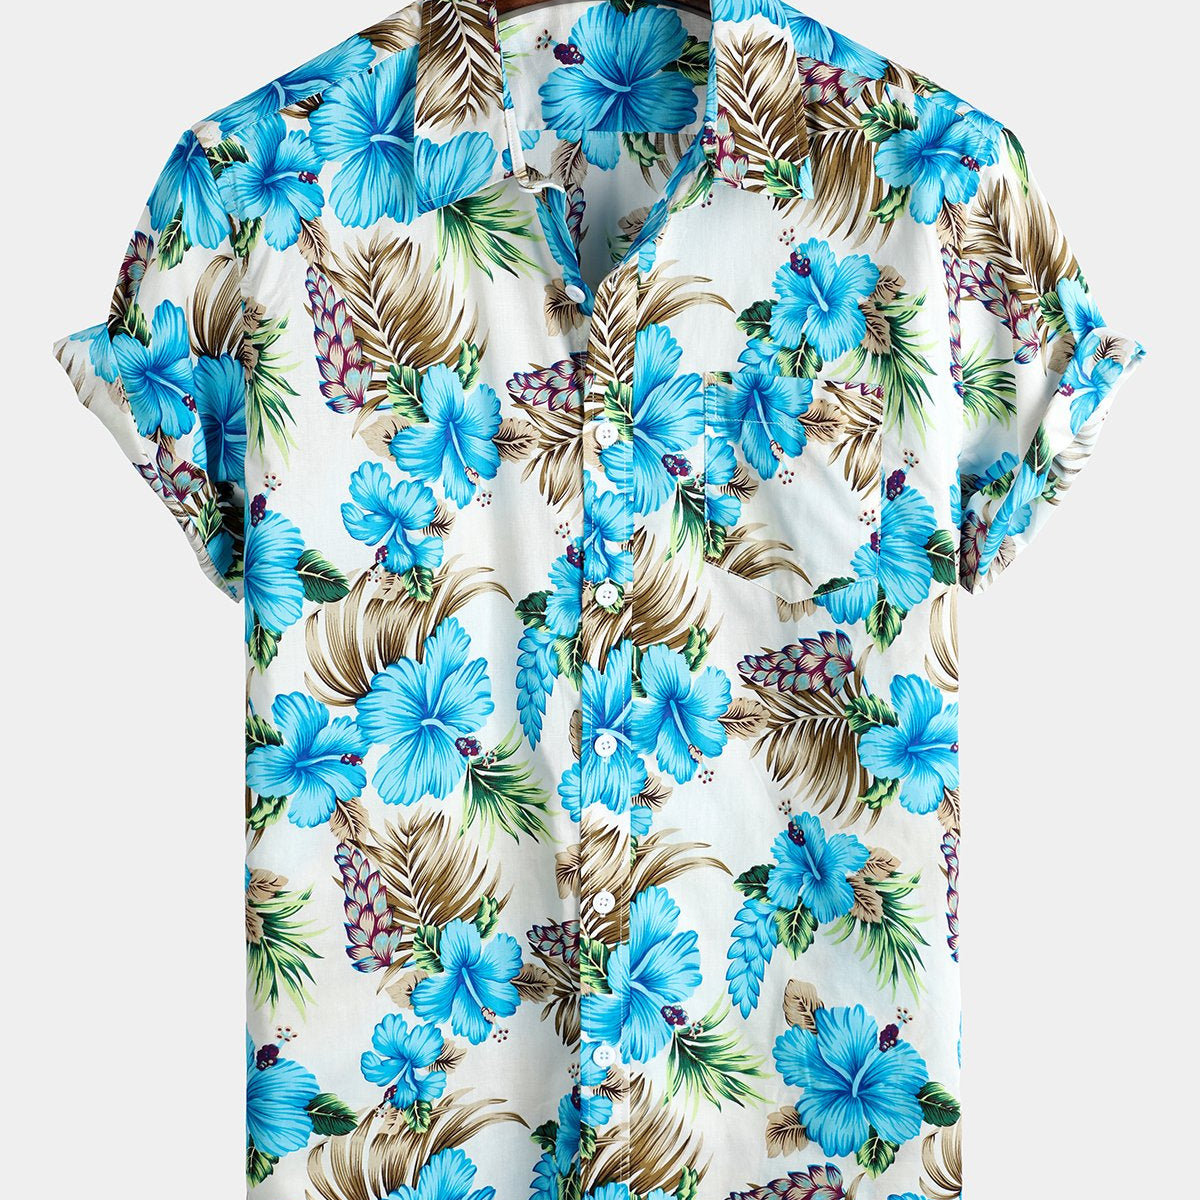 Men's Blue Floral Holiday Cotton Short Sleeve Shirt